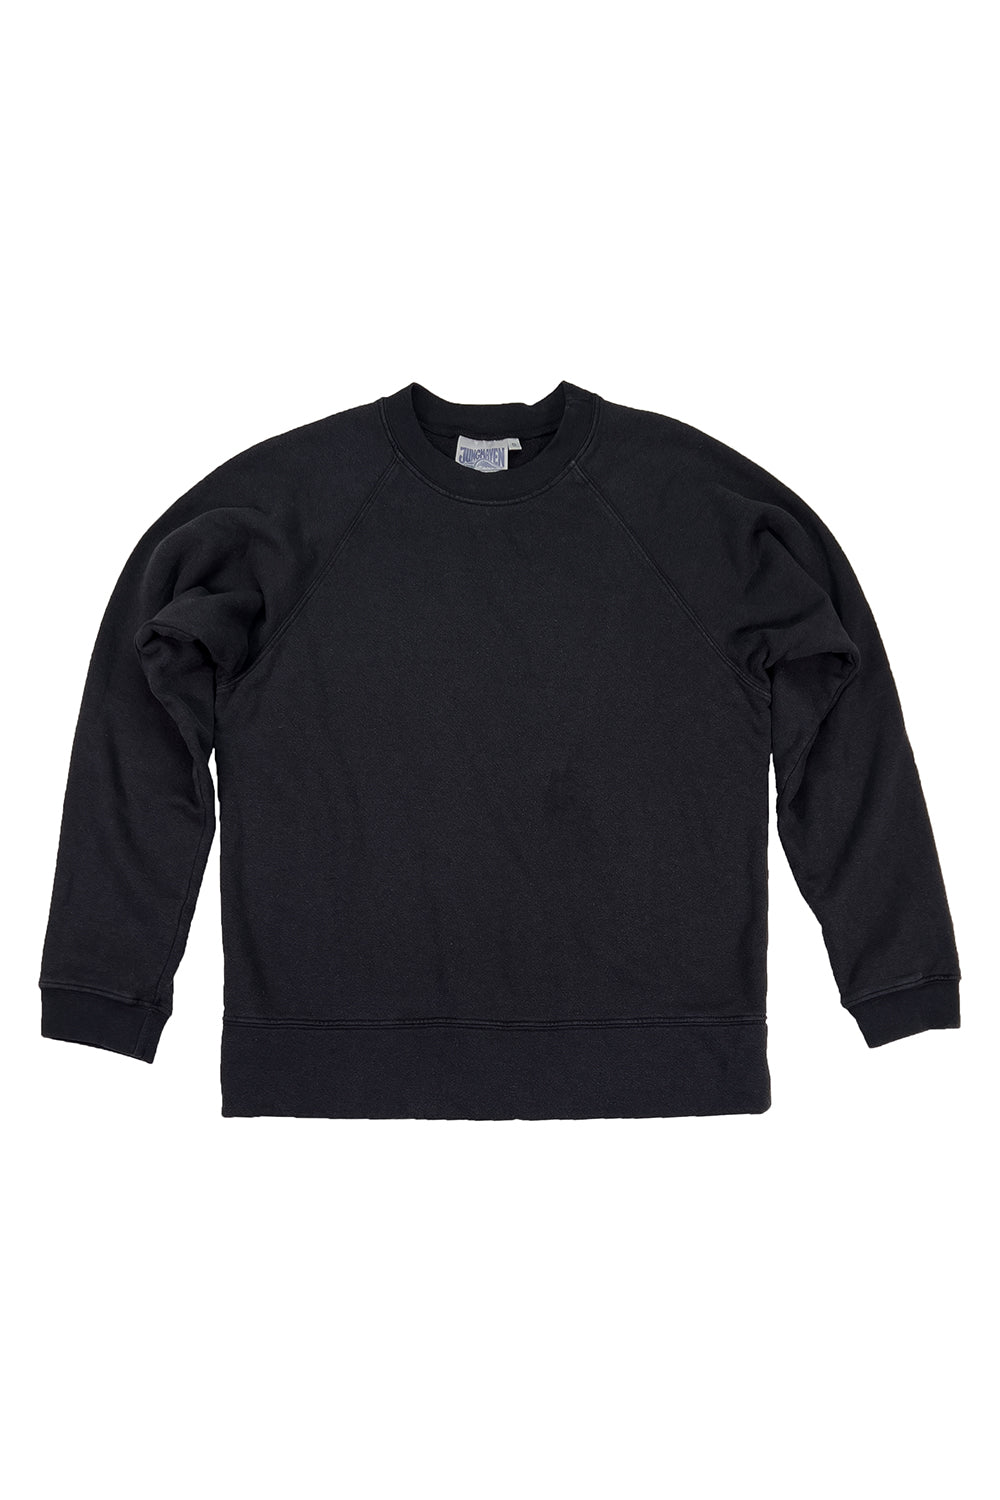 Sierra Raglan Sweatshirt | Jungmaven Hemp Clothing & Accessories / Color: Black